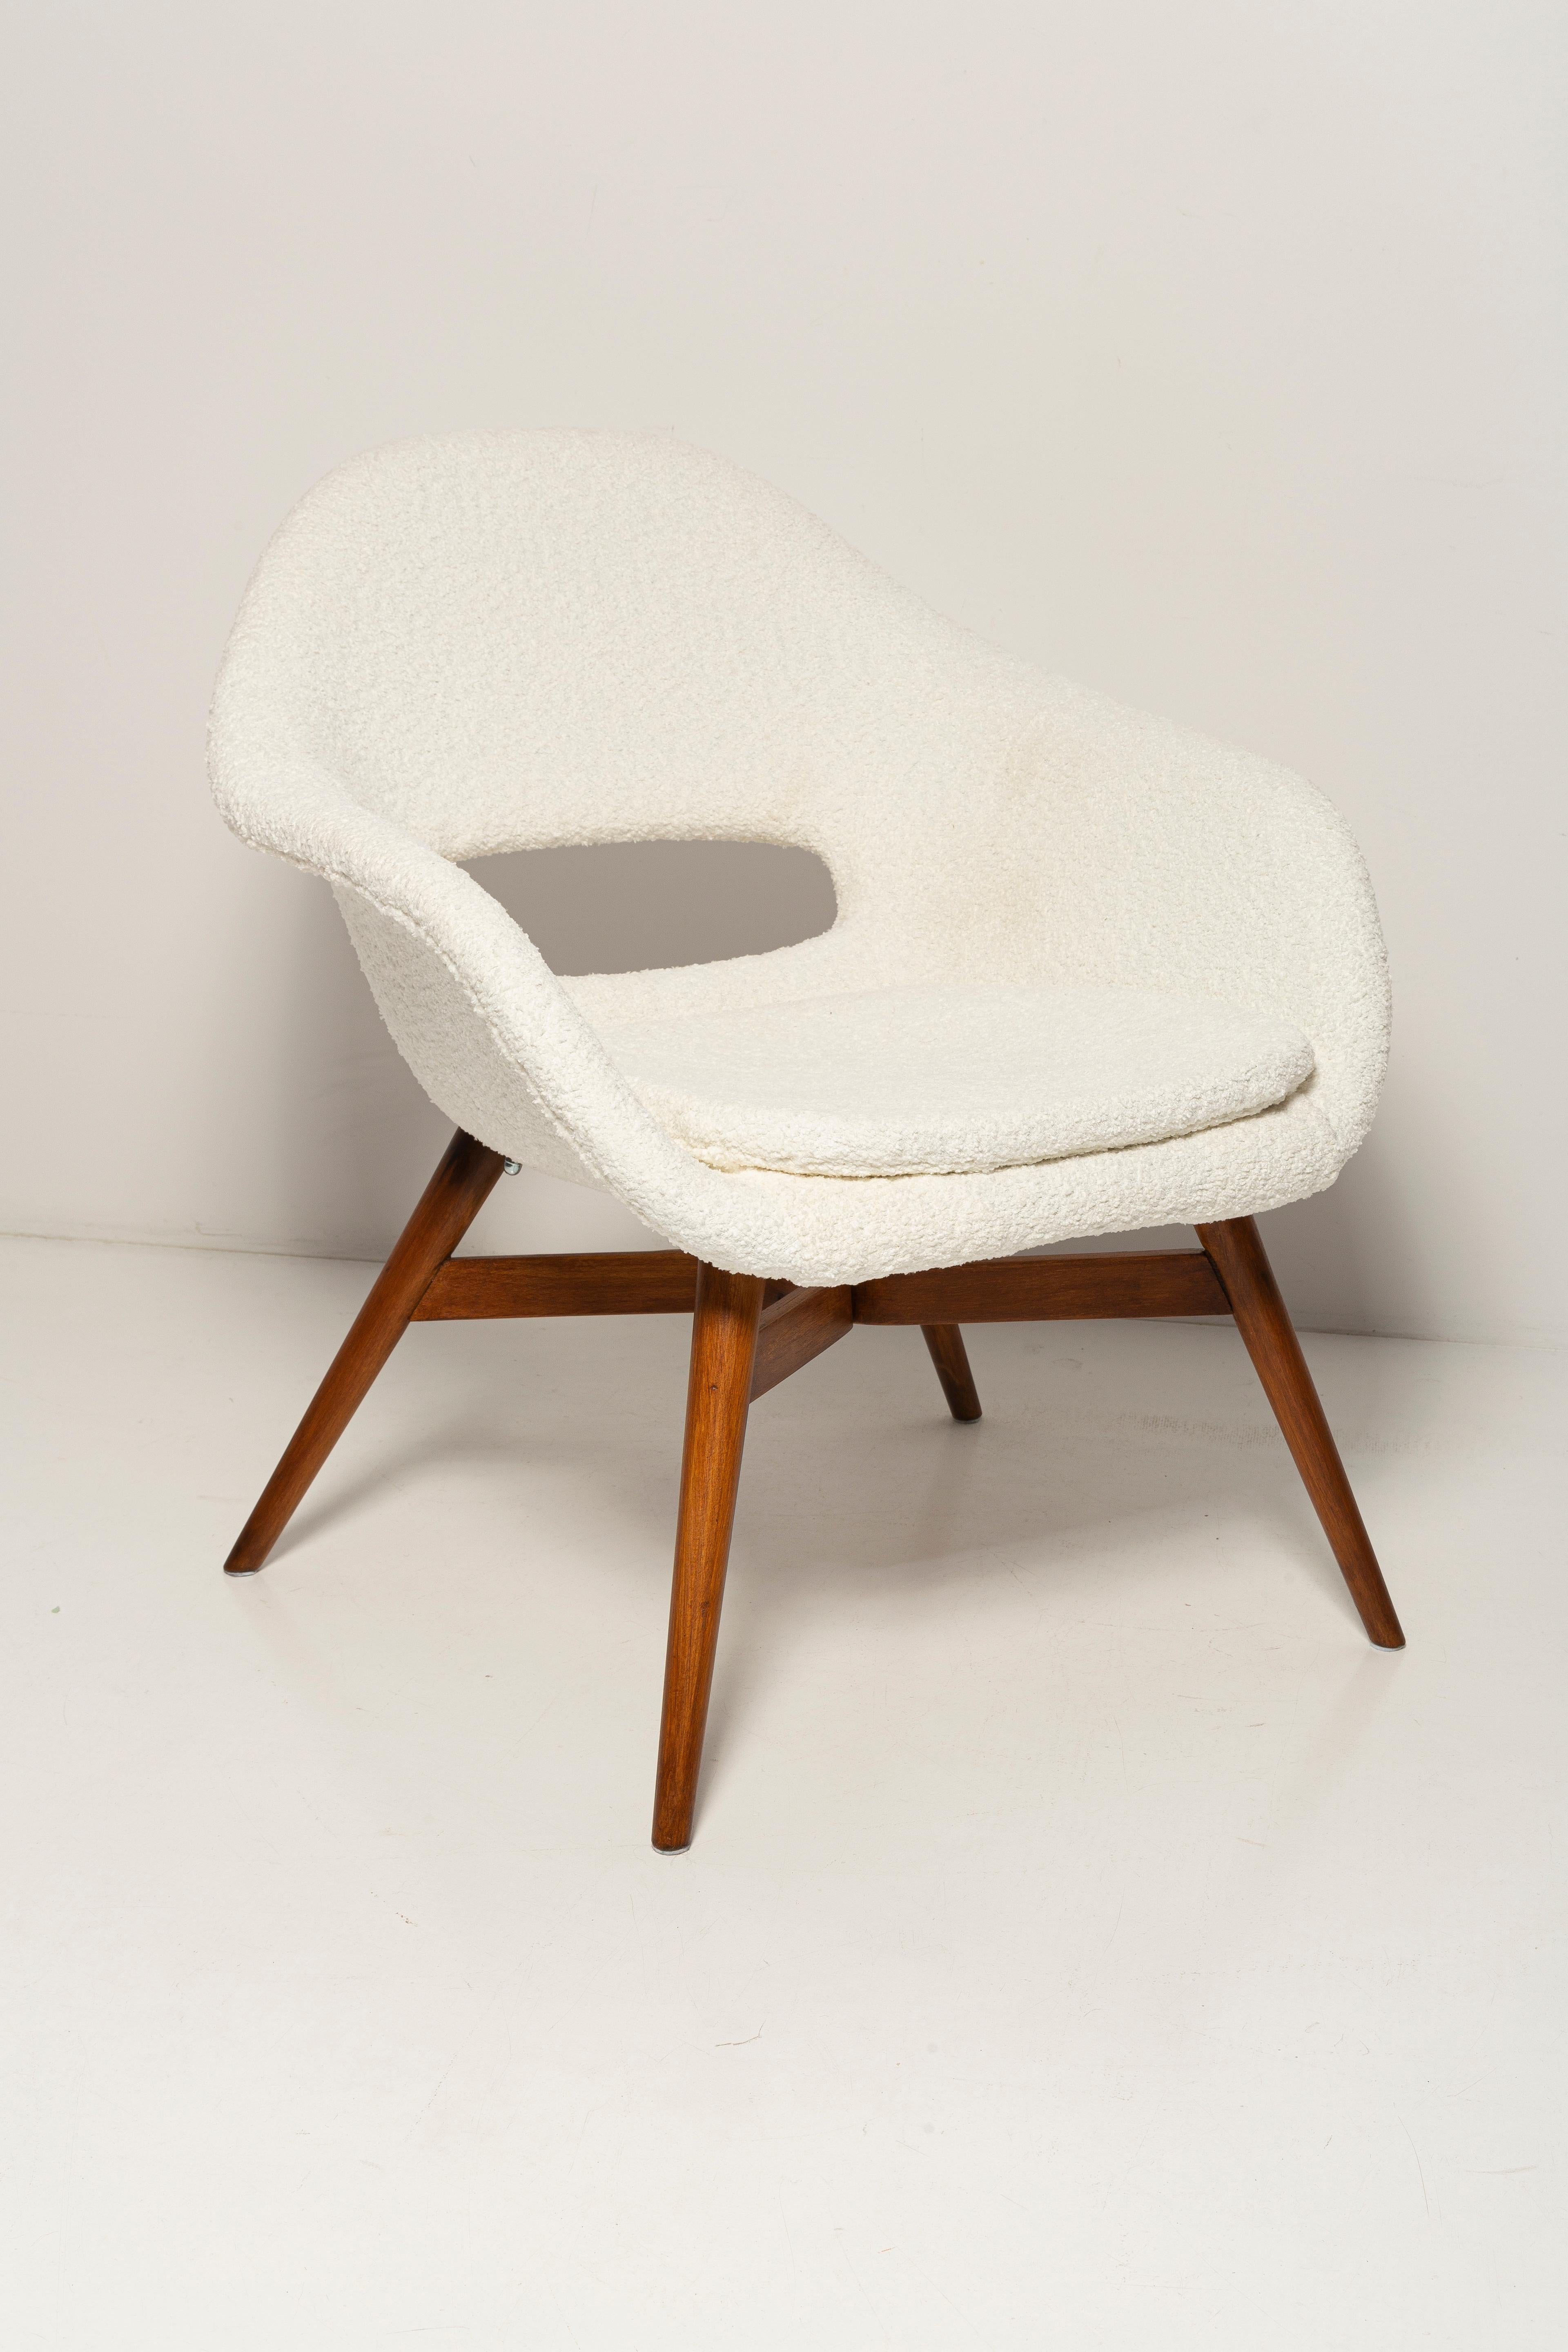 Amazign Shell chair designed by Miroslav Navratil in 1960s in Czechoslovakia.
One of the best project from the past. 

About the designer:

Miroslav Navrátil (born August 23, 1913 in Boršice; died April 14, 1999 in Brno) was a Czechoslovakian